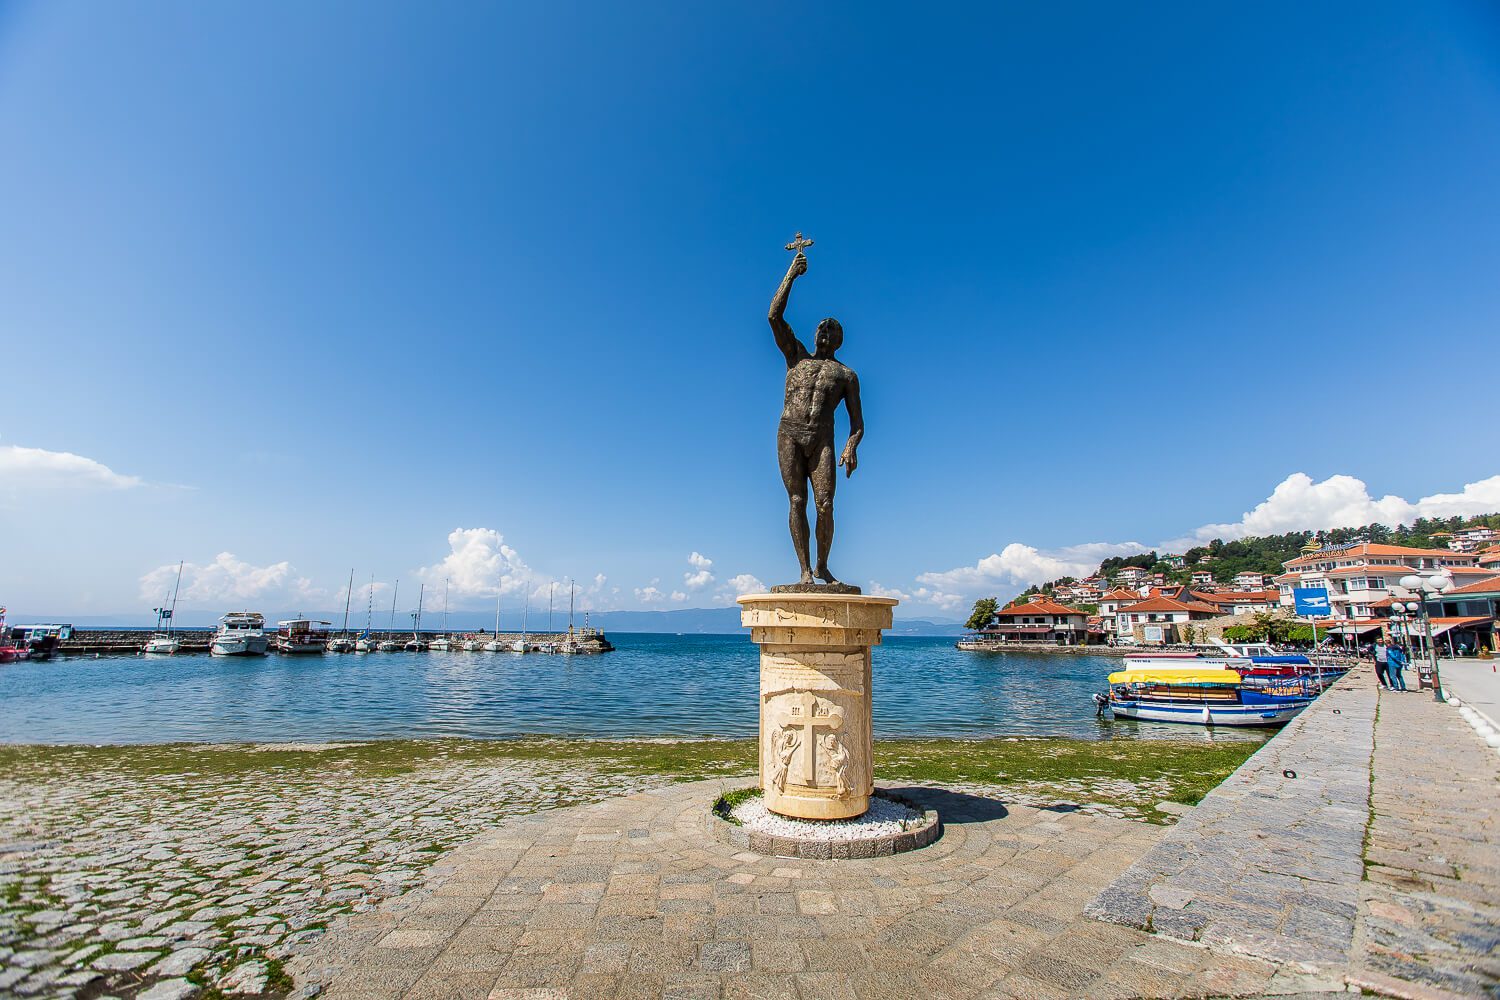 Ohrid Boardwalk